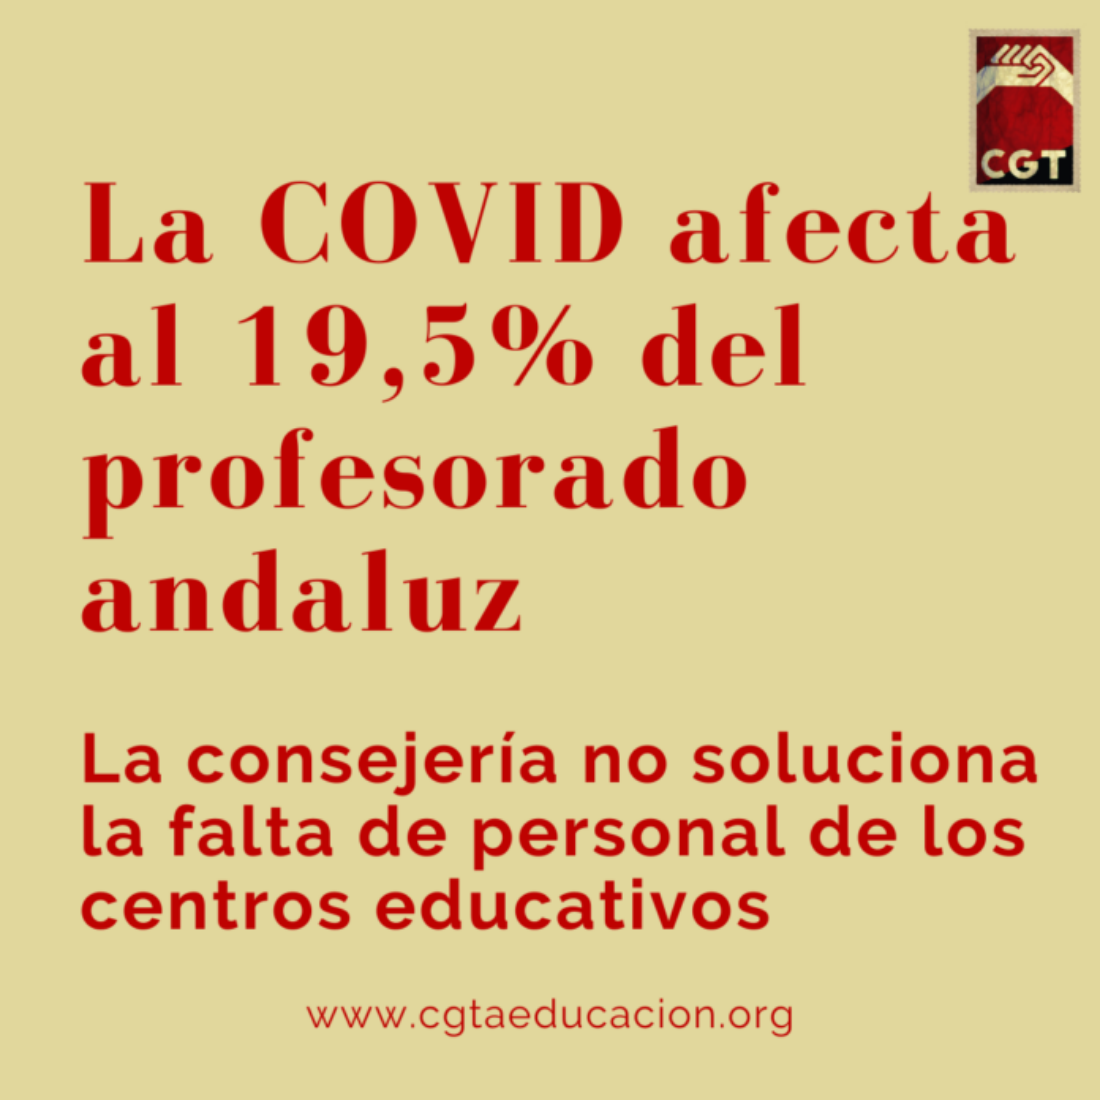 La COVID afecta al 19,5% del profesorado andaluz